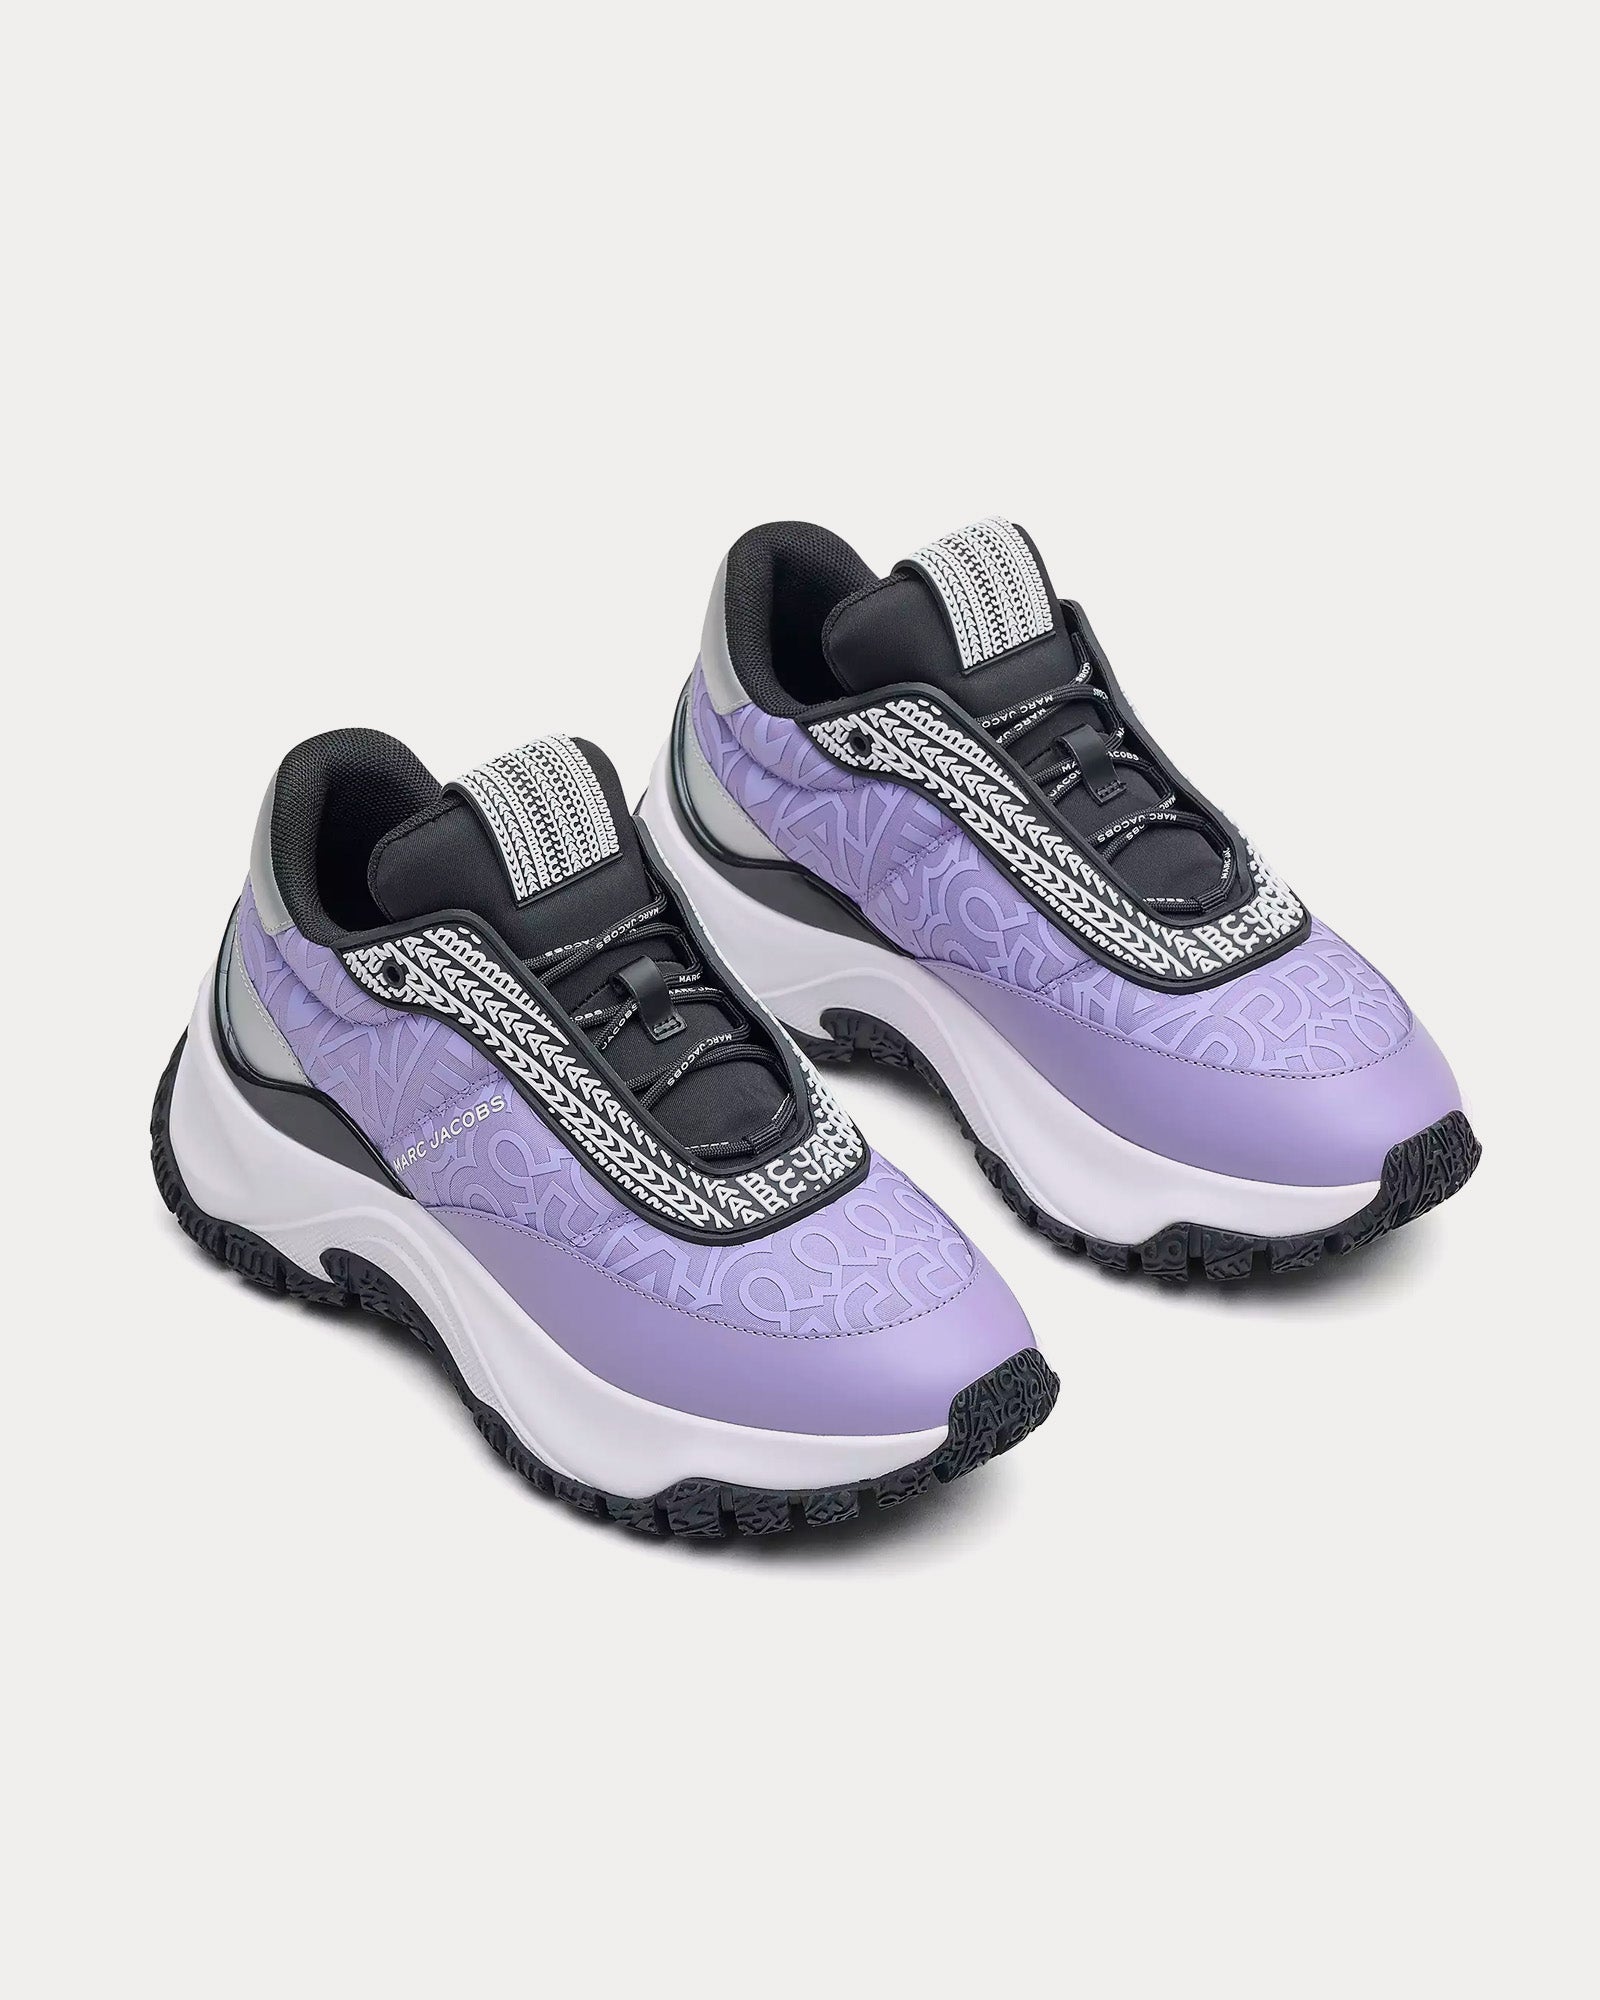 Marc Jacobs - The Monogram Lazy Runner Purple / Multi Low Top Sneakers